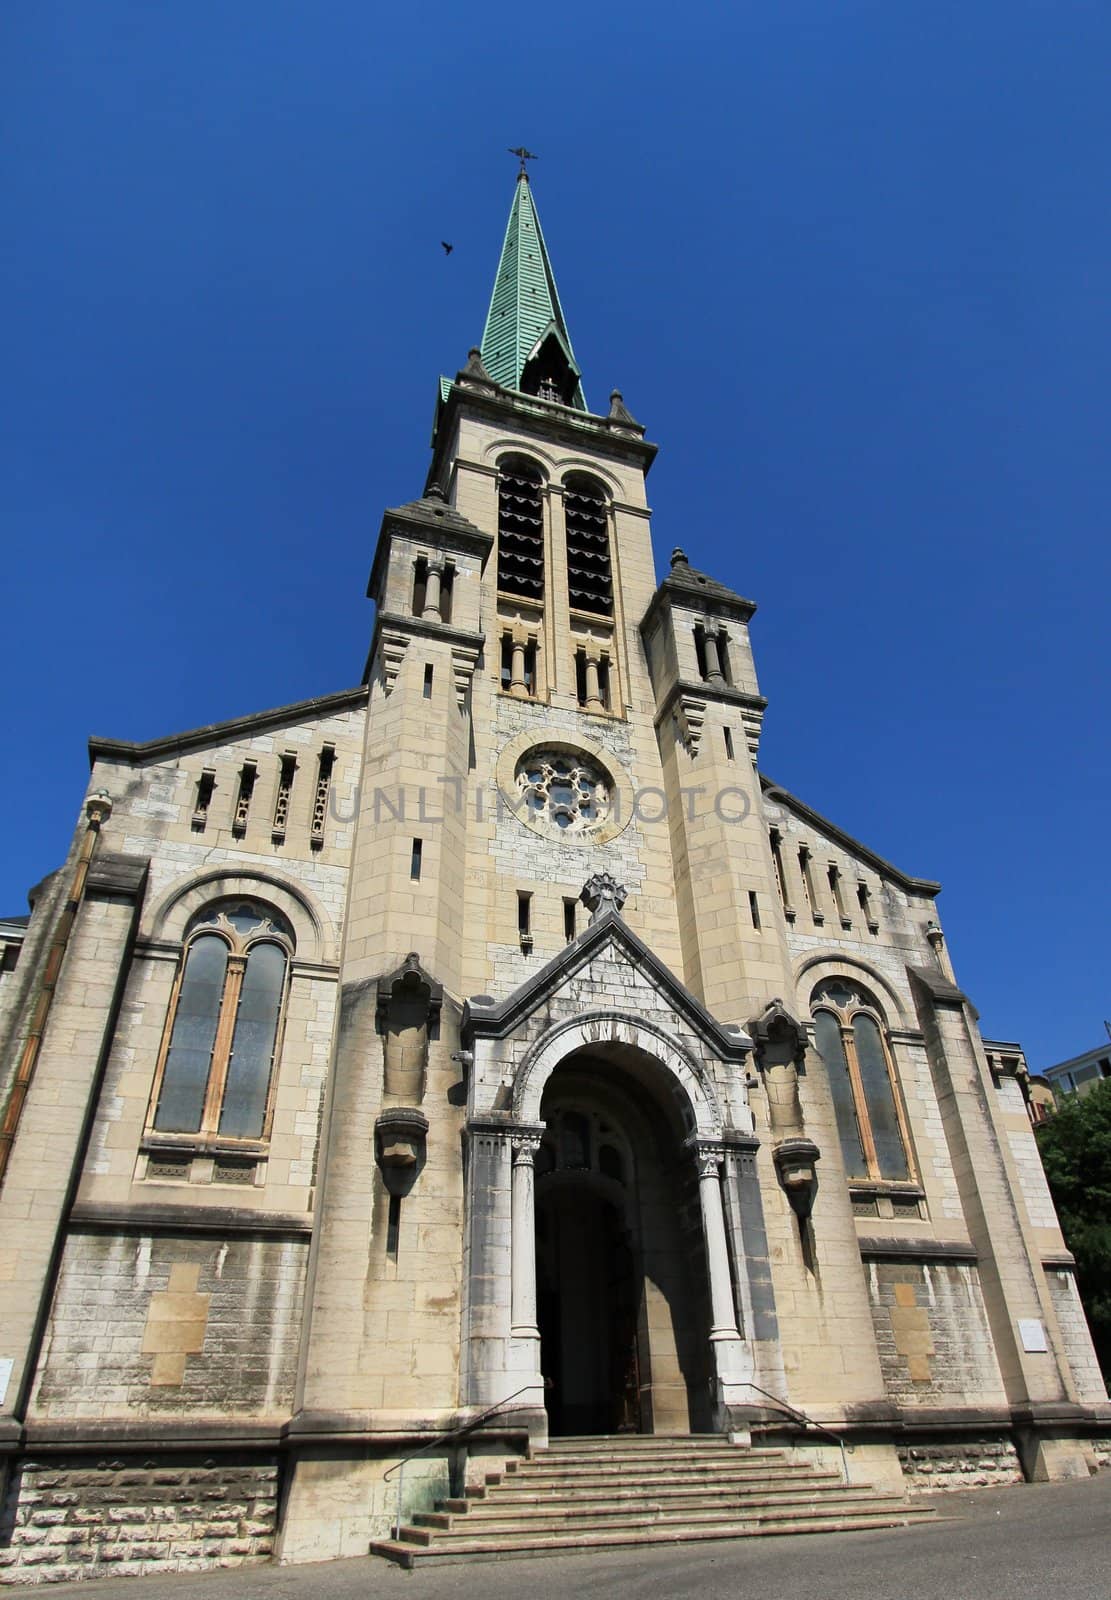 Notre-Dame church at Aix-les-Bains, France by Elenaphotos21